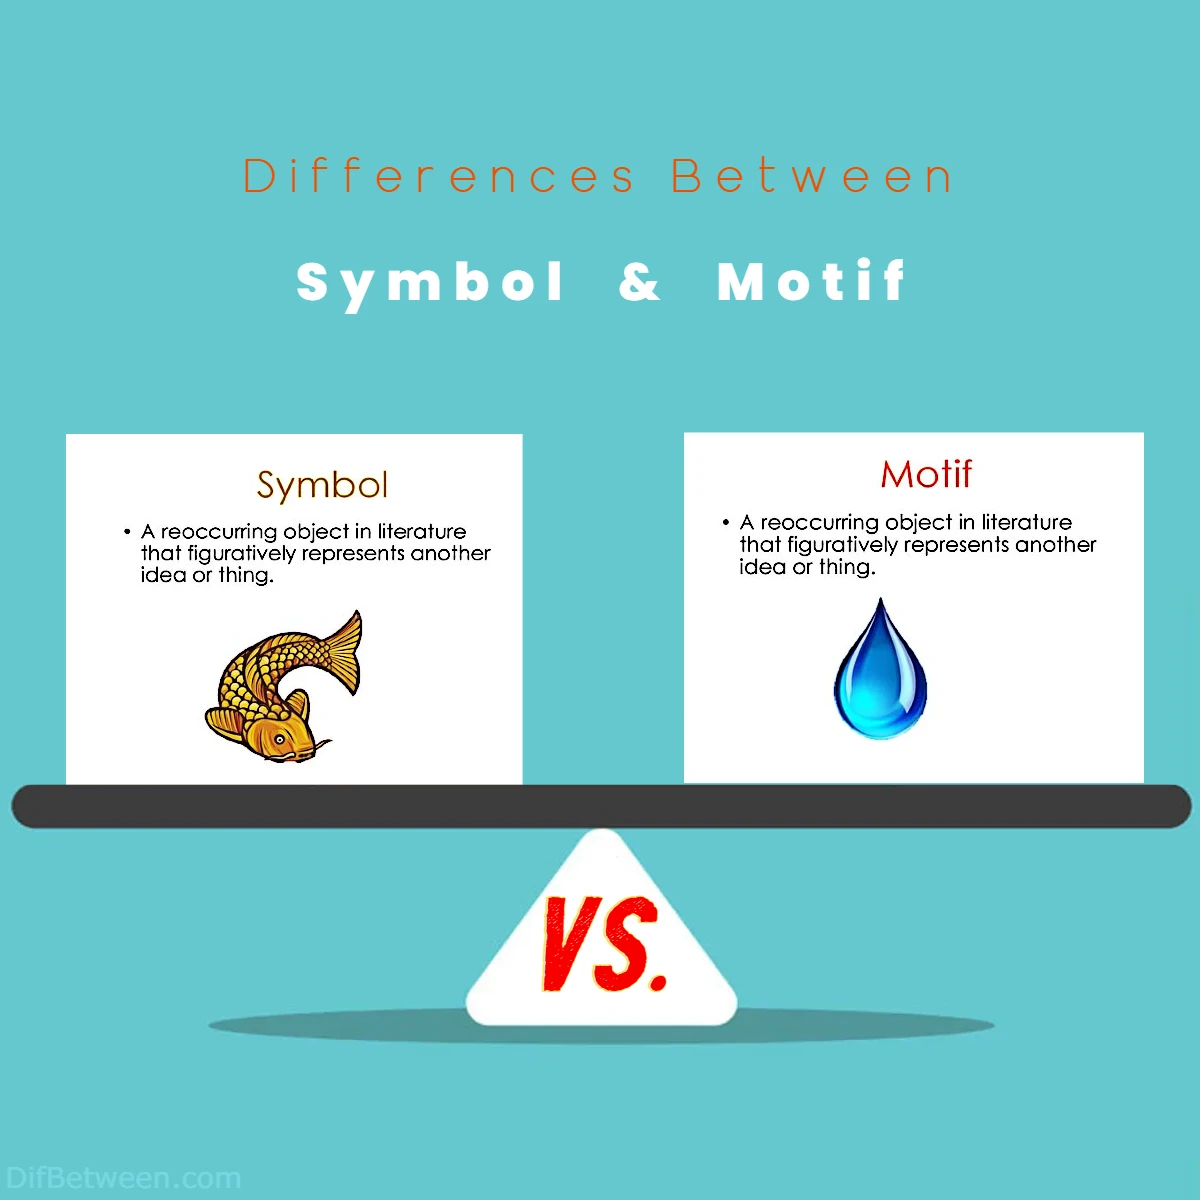 Differences Between Symbol vs Motif